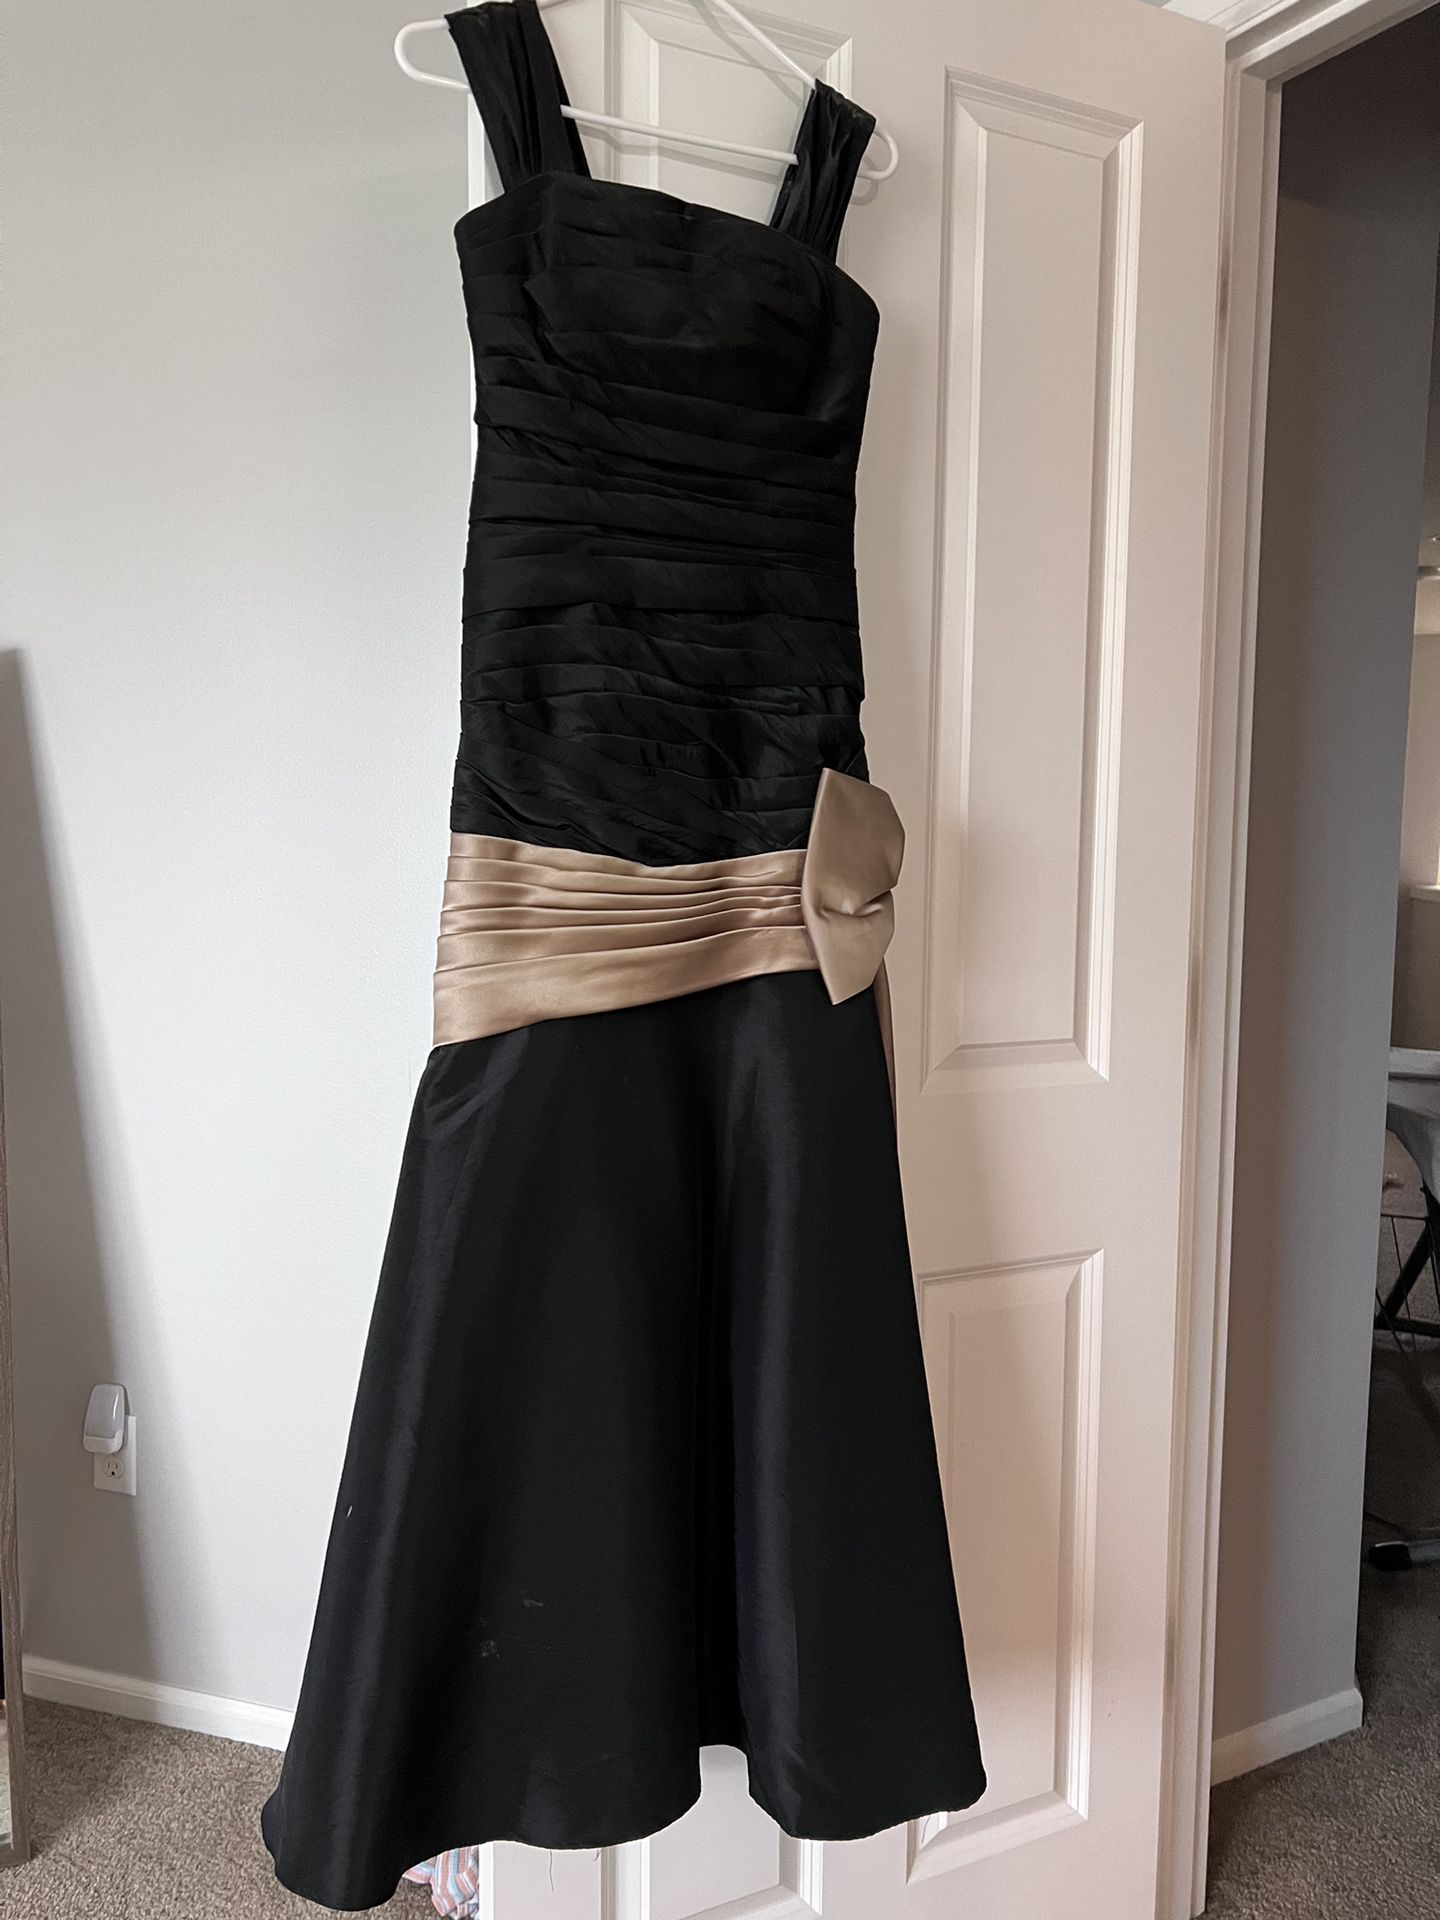 Prom Dress Size 0-2